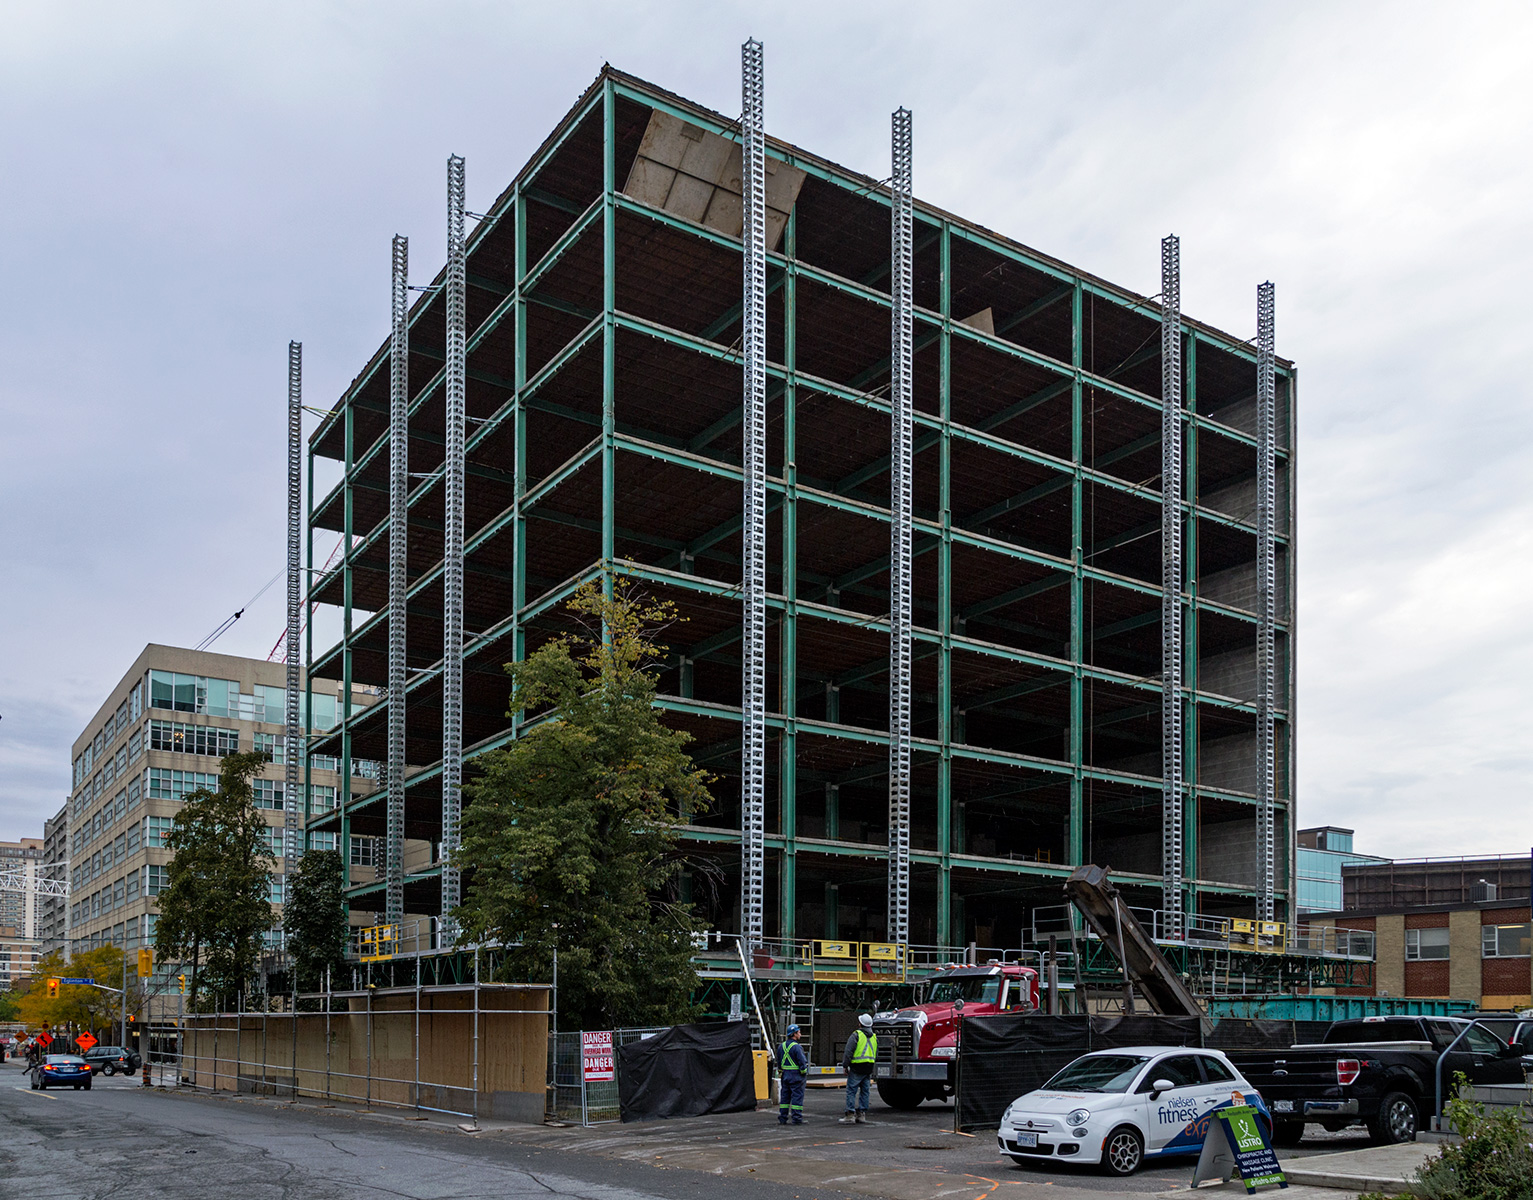 20151021. Menkes' The Eglinton condominiums will replace this 19